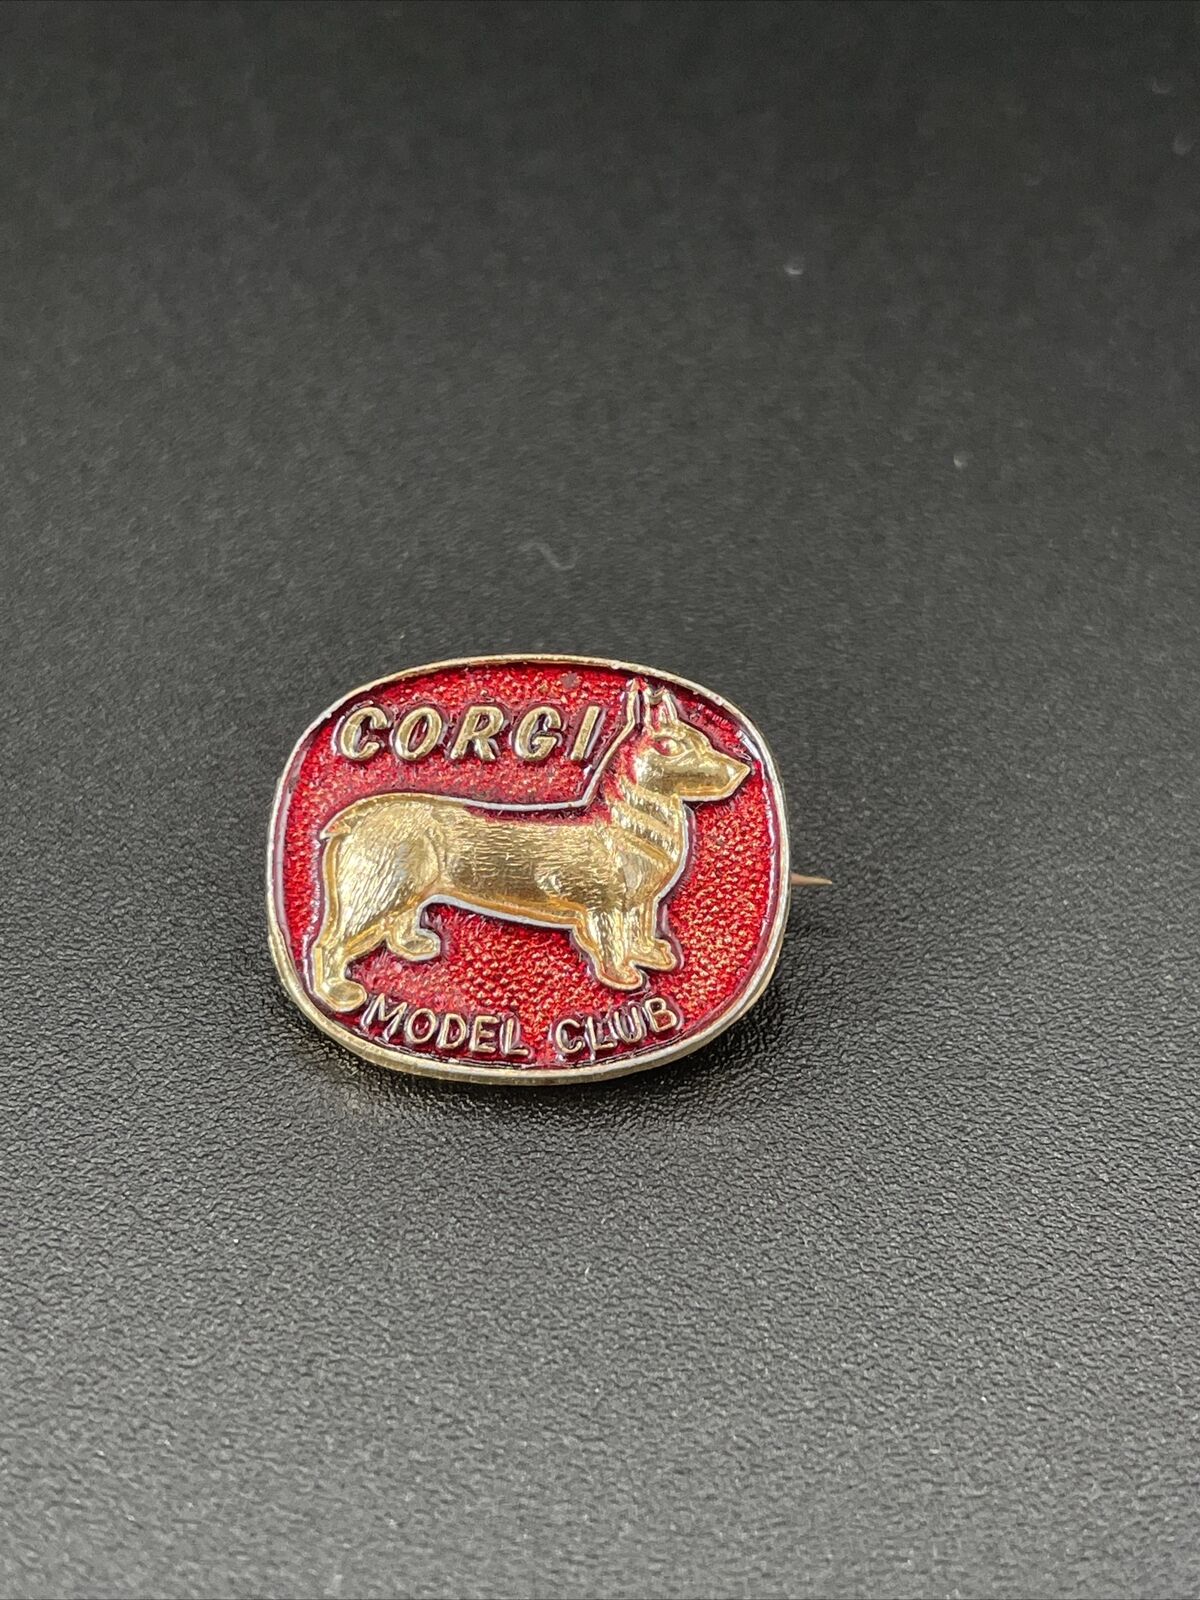 Corgi Model Club Pin Vintage Dog Collectible